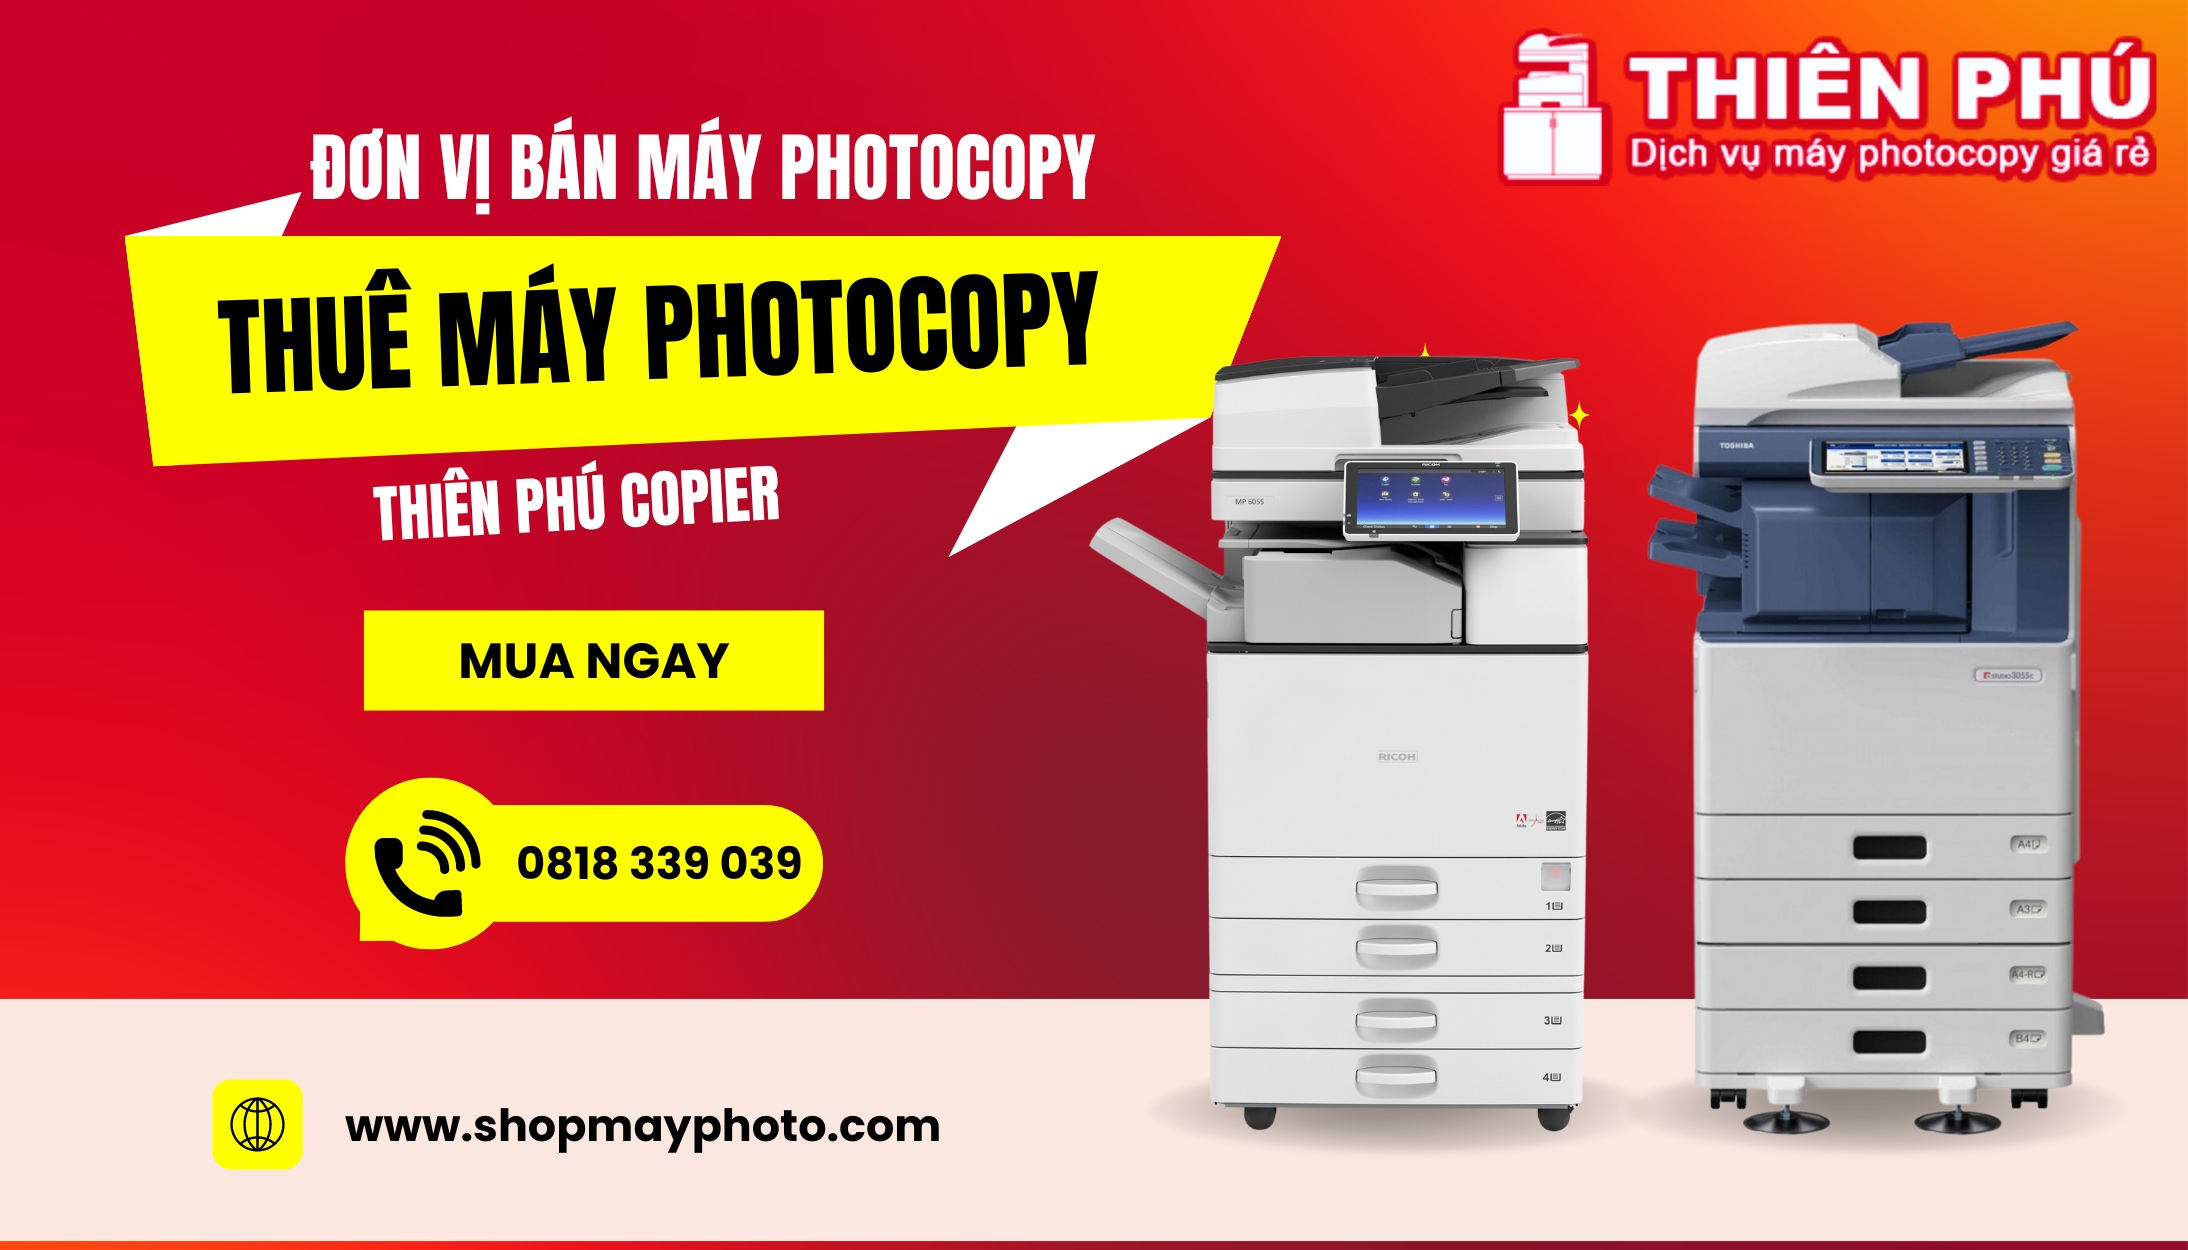 Mua máy photocopy tại Thiên Phú Copier